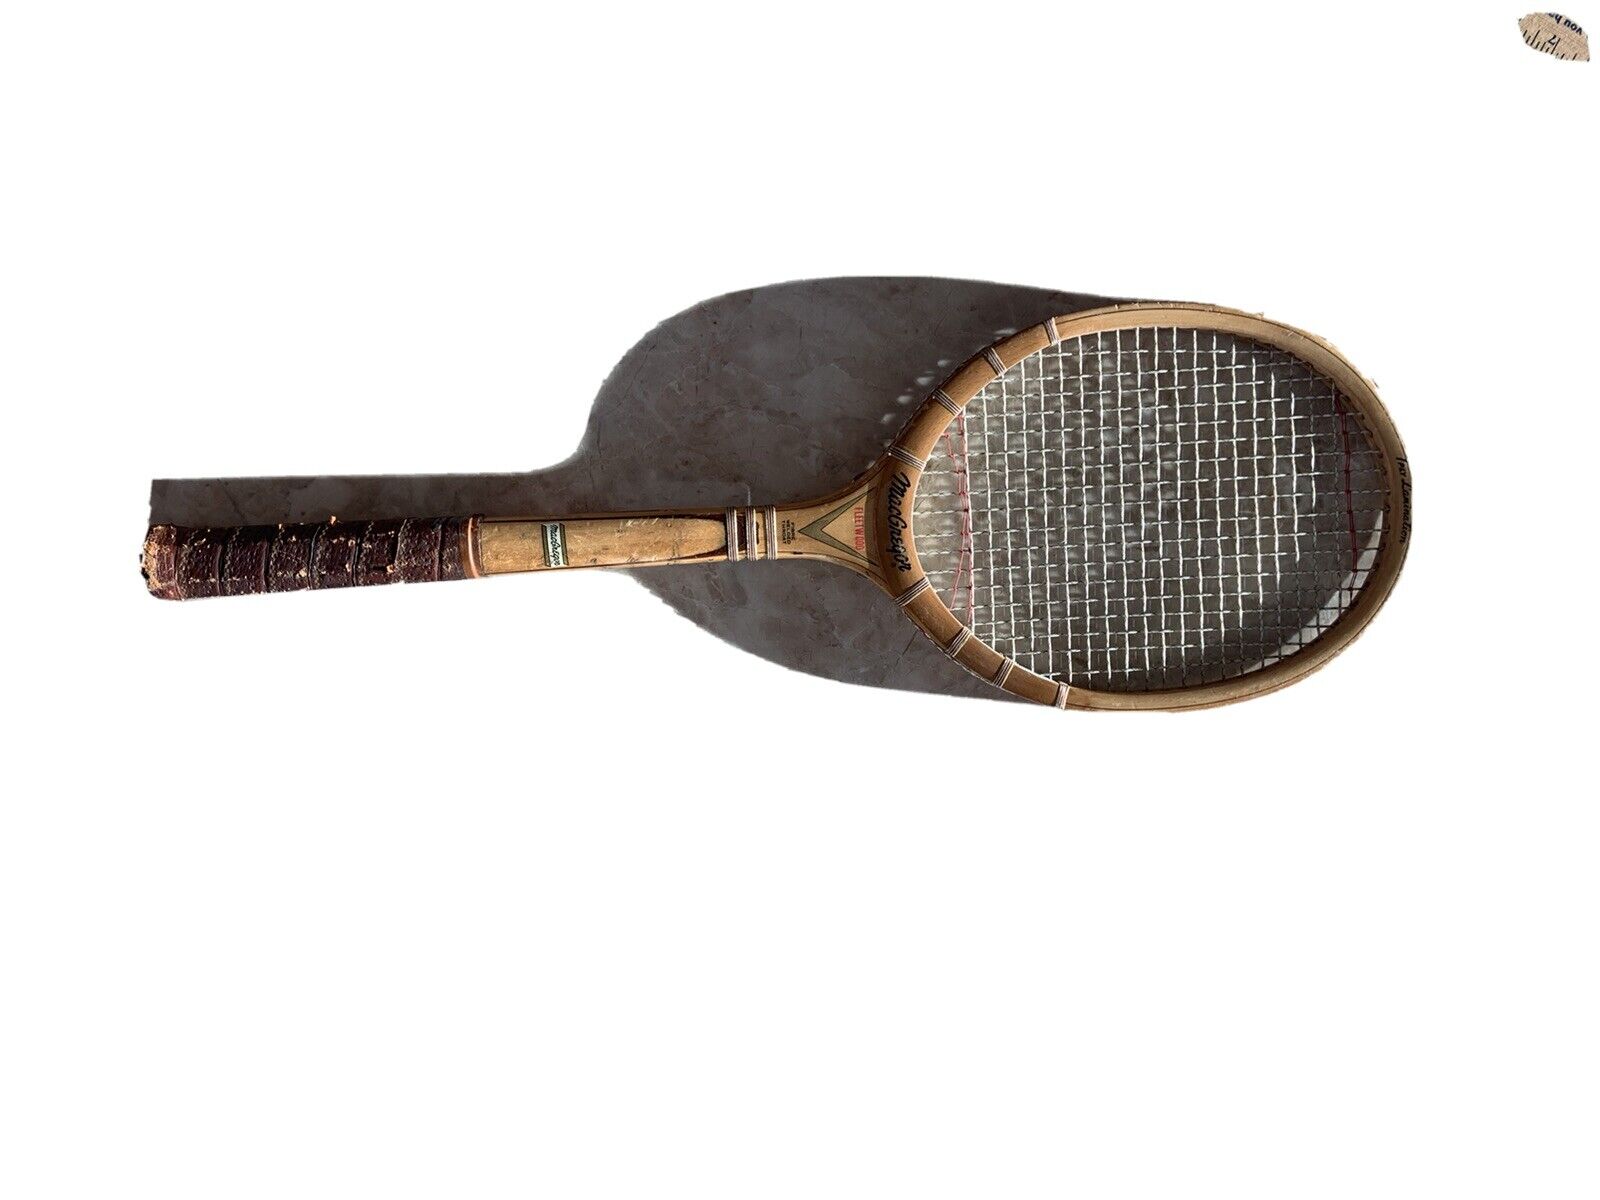 MacGregor Fleetwood Vintage Wood Tennis wal 4-3 8 lowest price Latest item racket Racquet